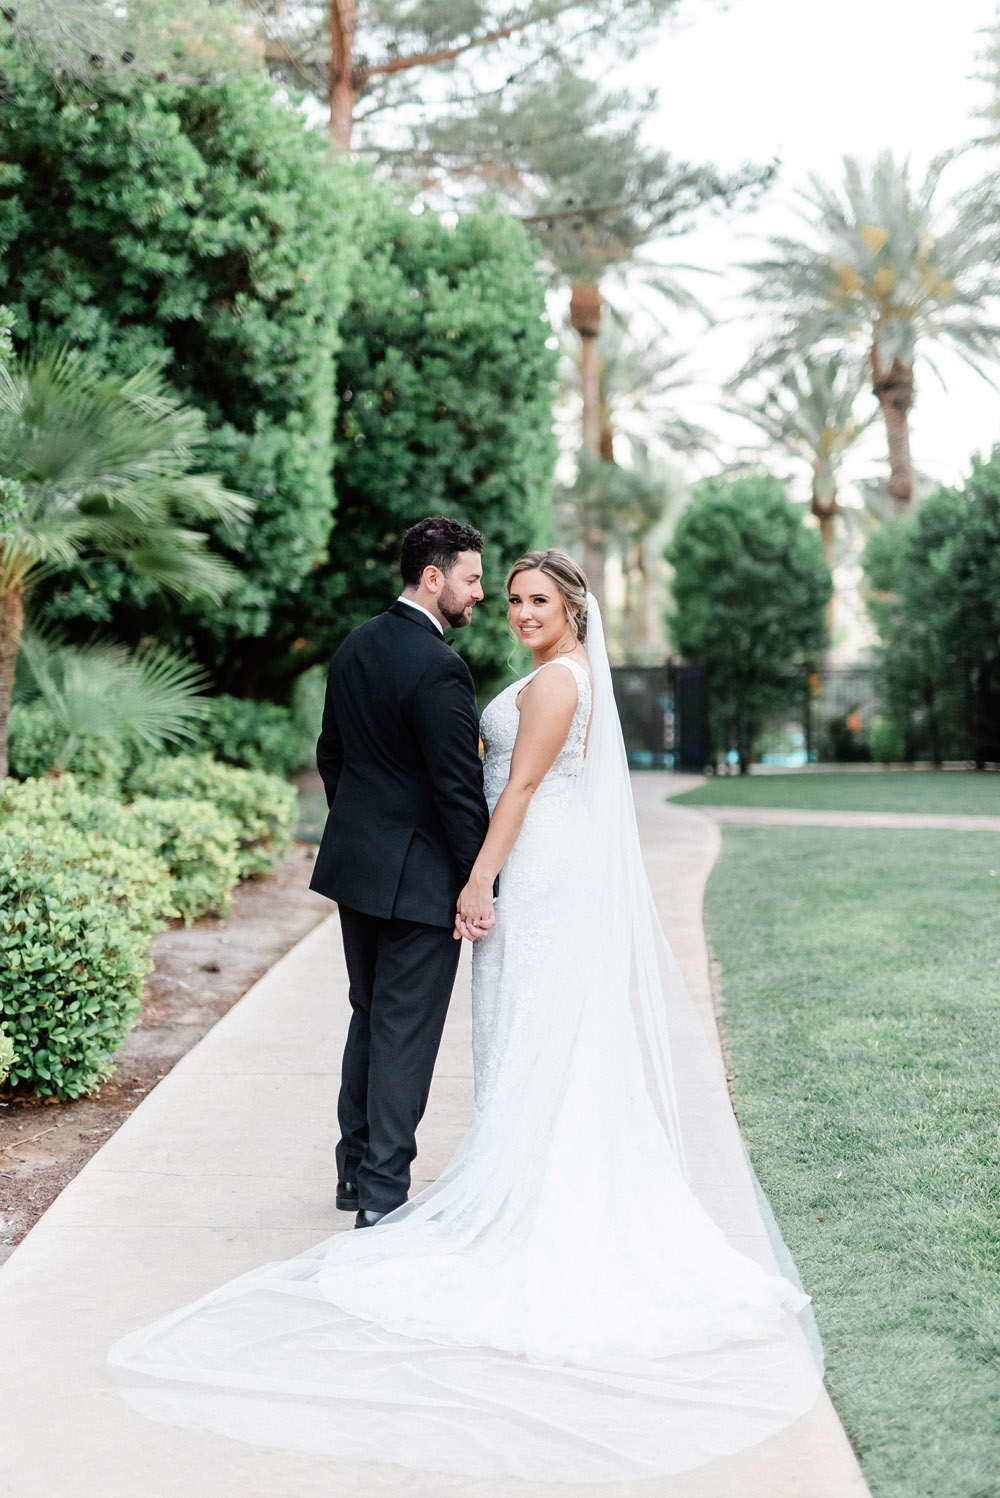 JW Marriott Las Vegas Wedding Photography | Kristen Marie Weddings + Portraits